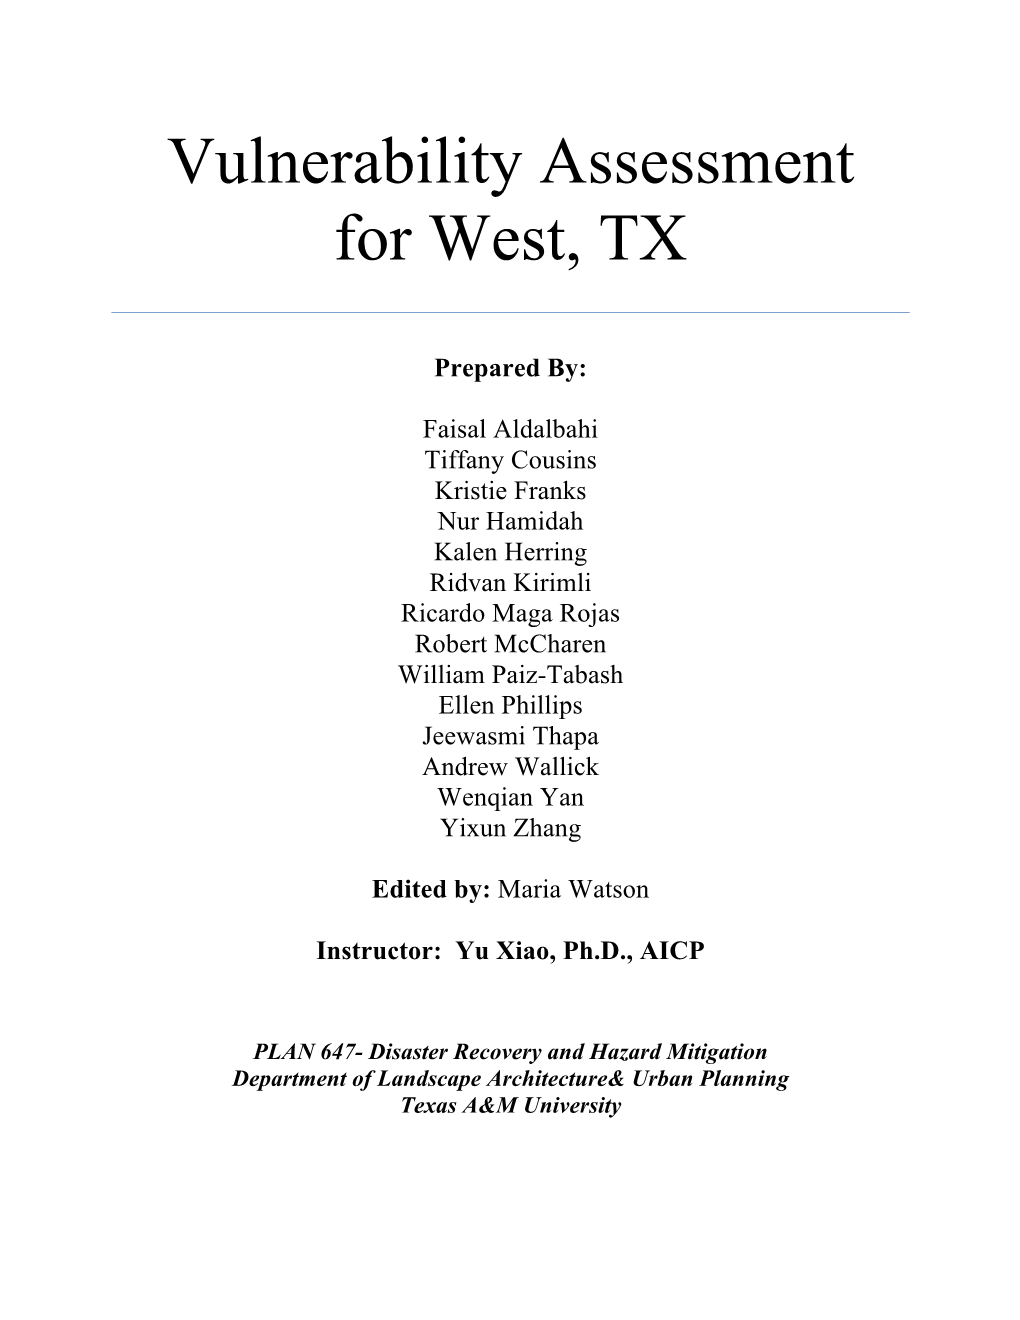 Vulnerability Assessment for West, TX